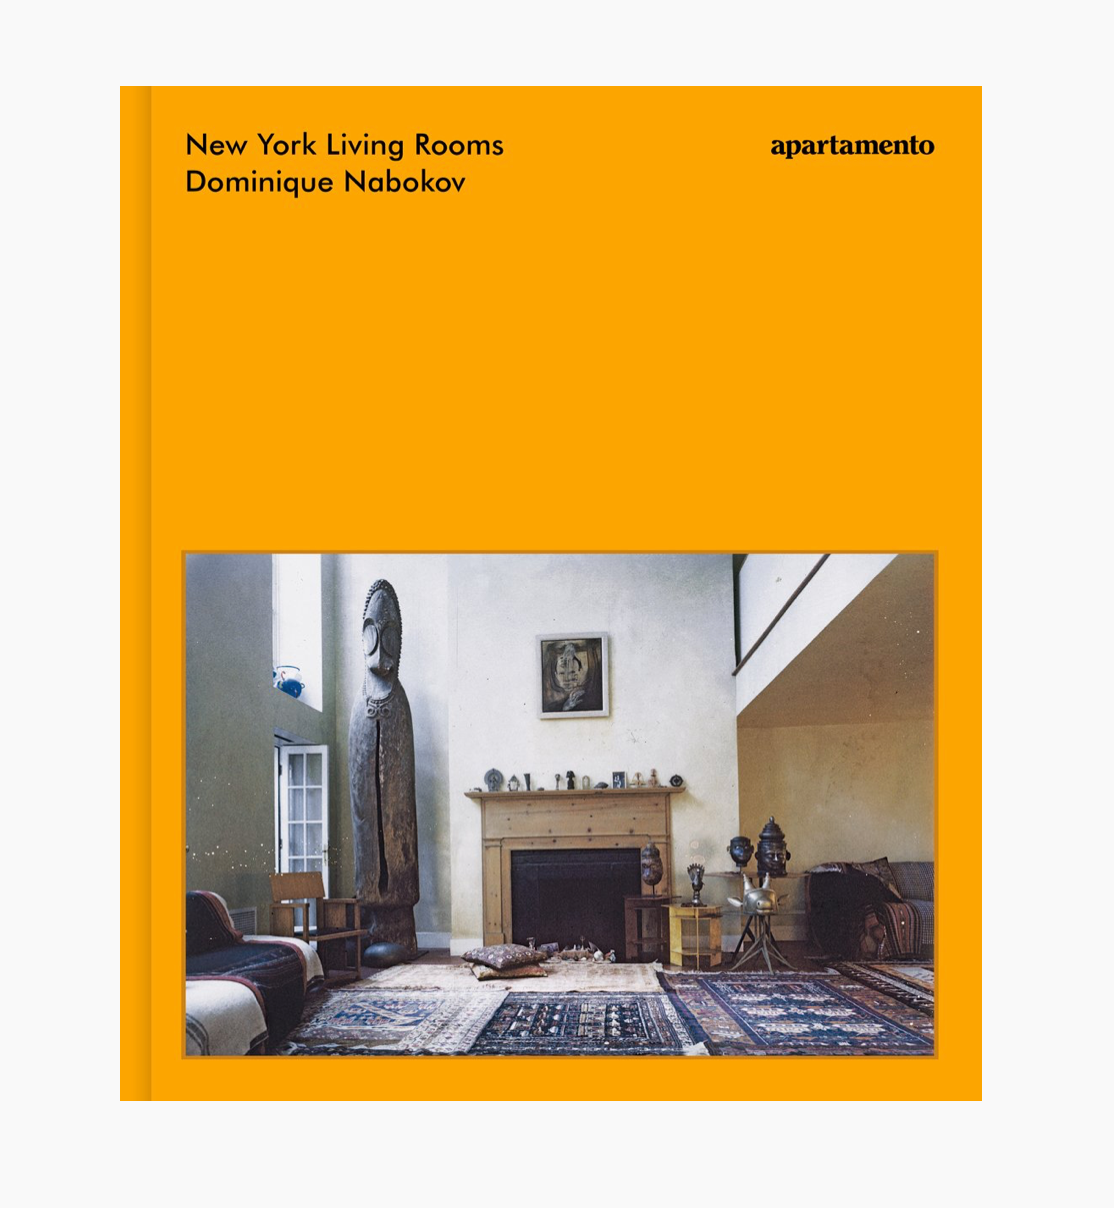 Dominique Nabokov: New York Living Rooms by Apartamento